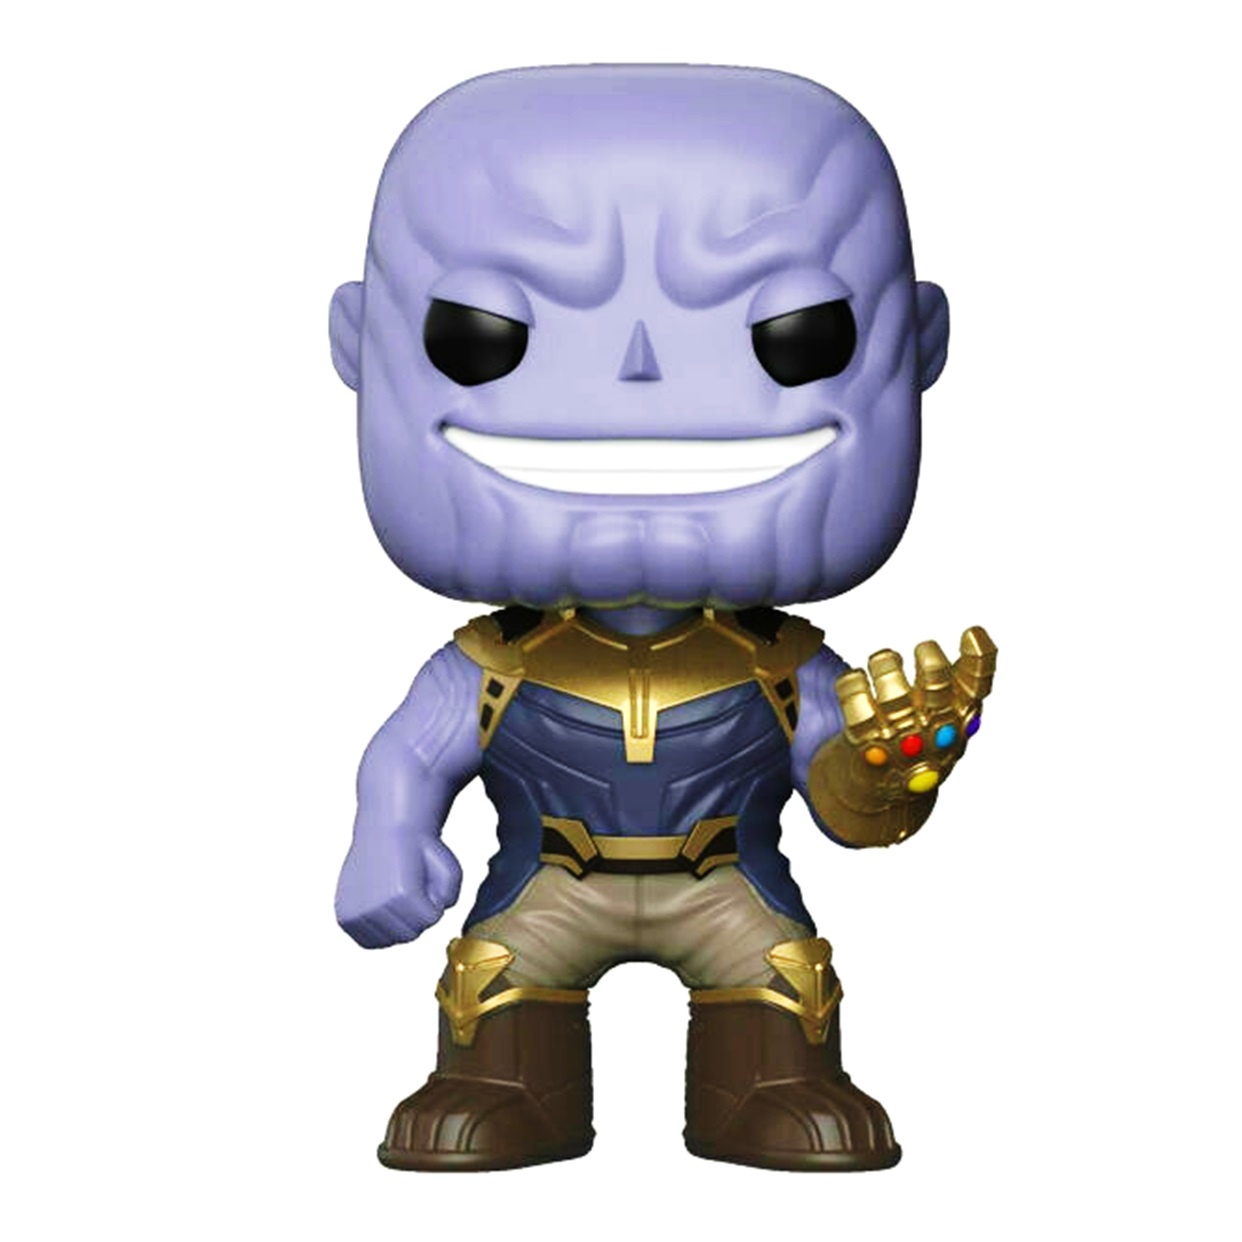 Thanos #289 Figura Avengers Infinity War Funko Pop!